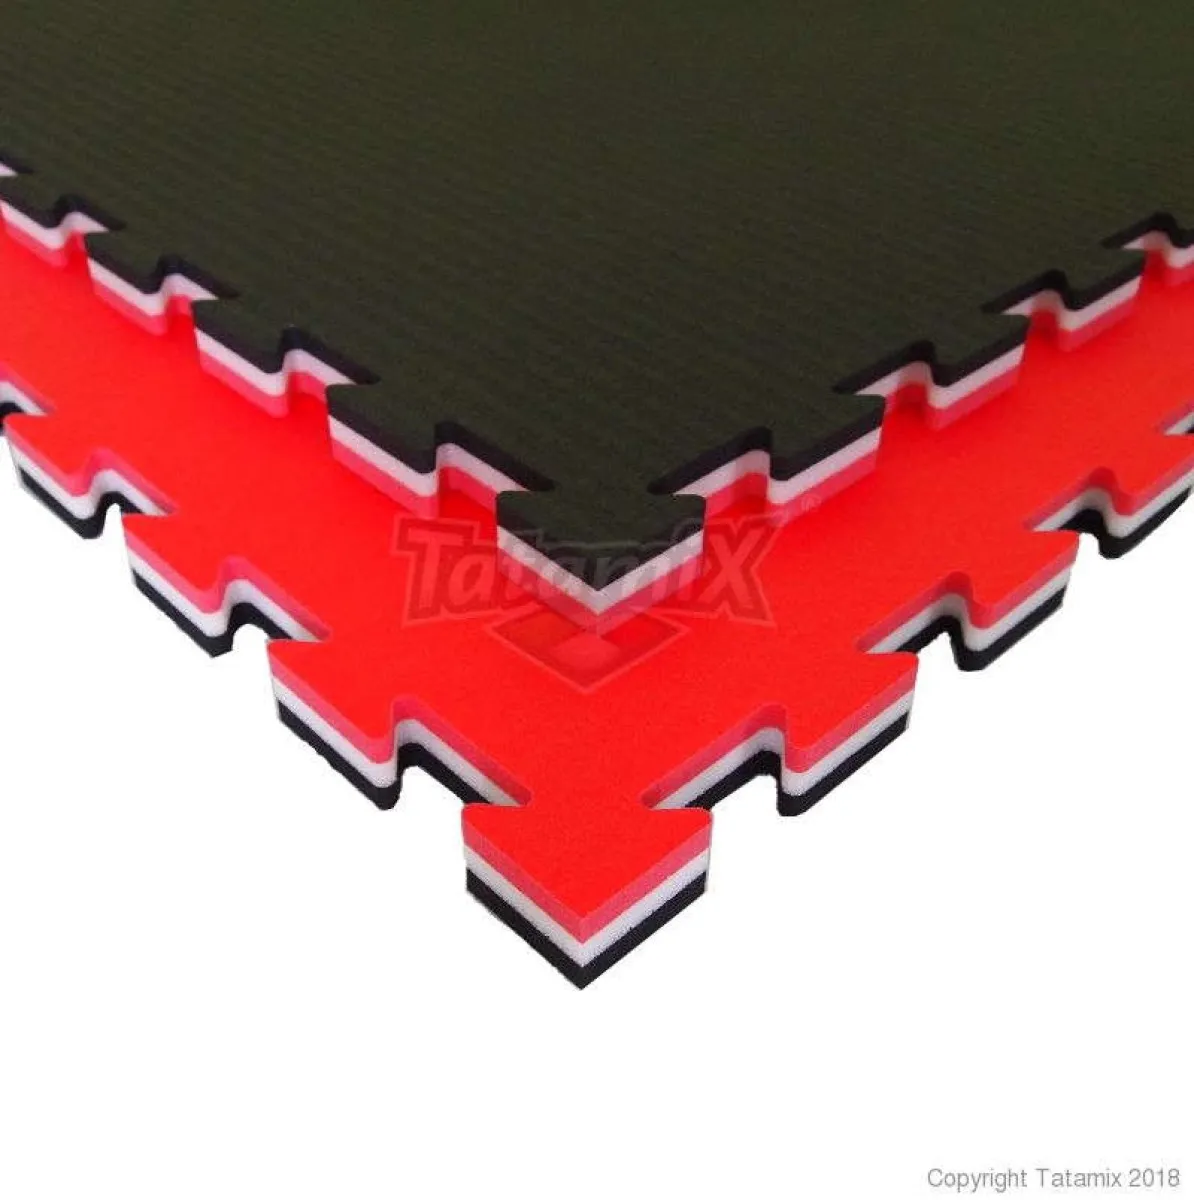 Tatami J30L mat black/white/red 100 cm x 100 cm x 3 cm